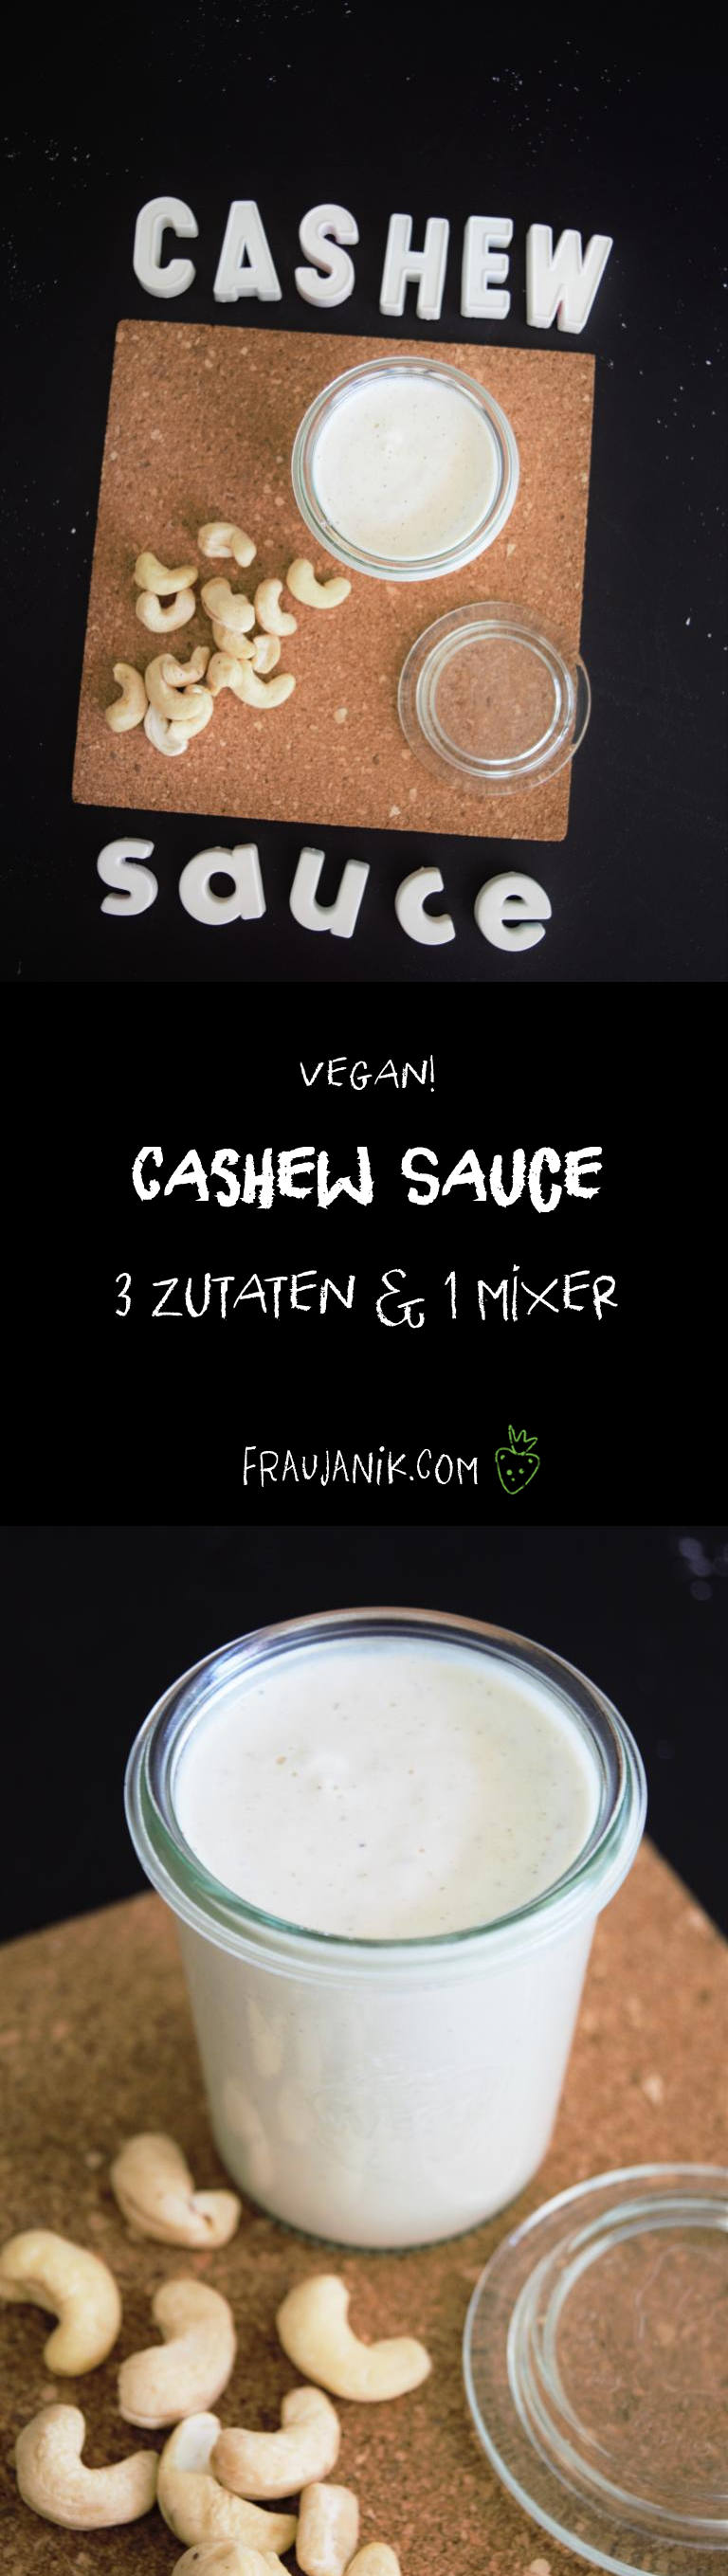 Cashew Sauce